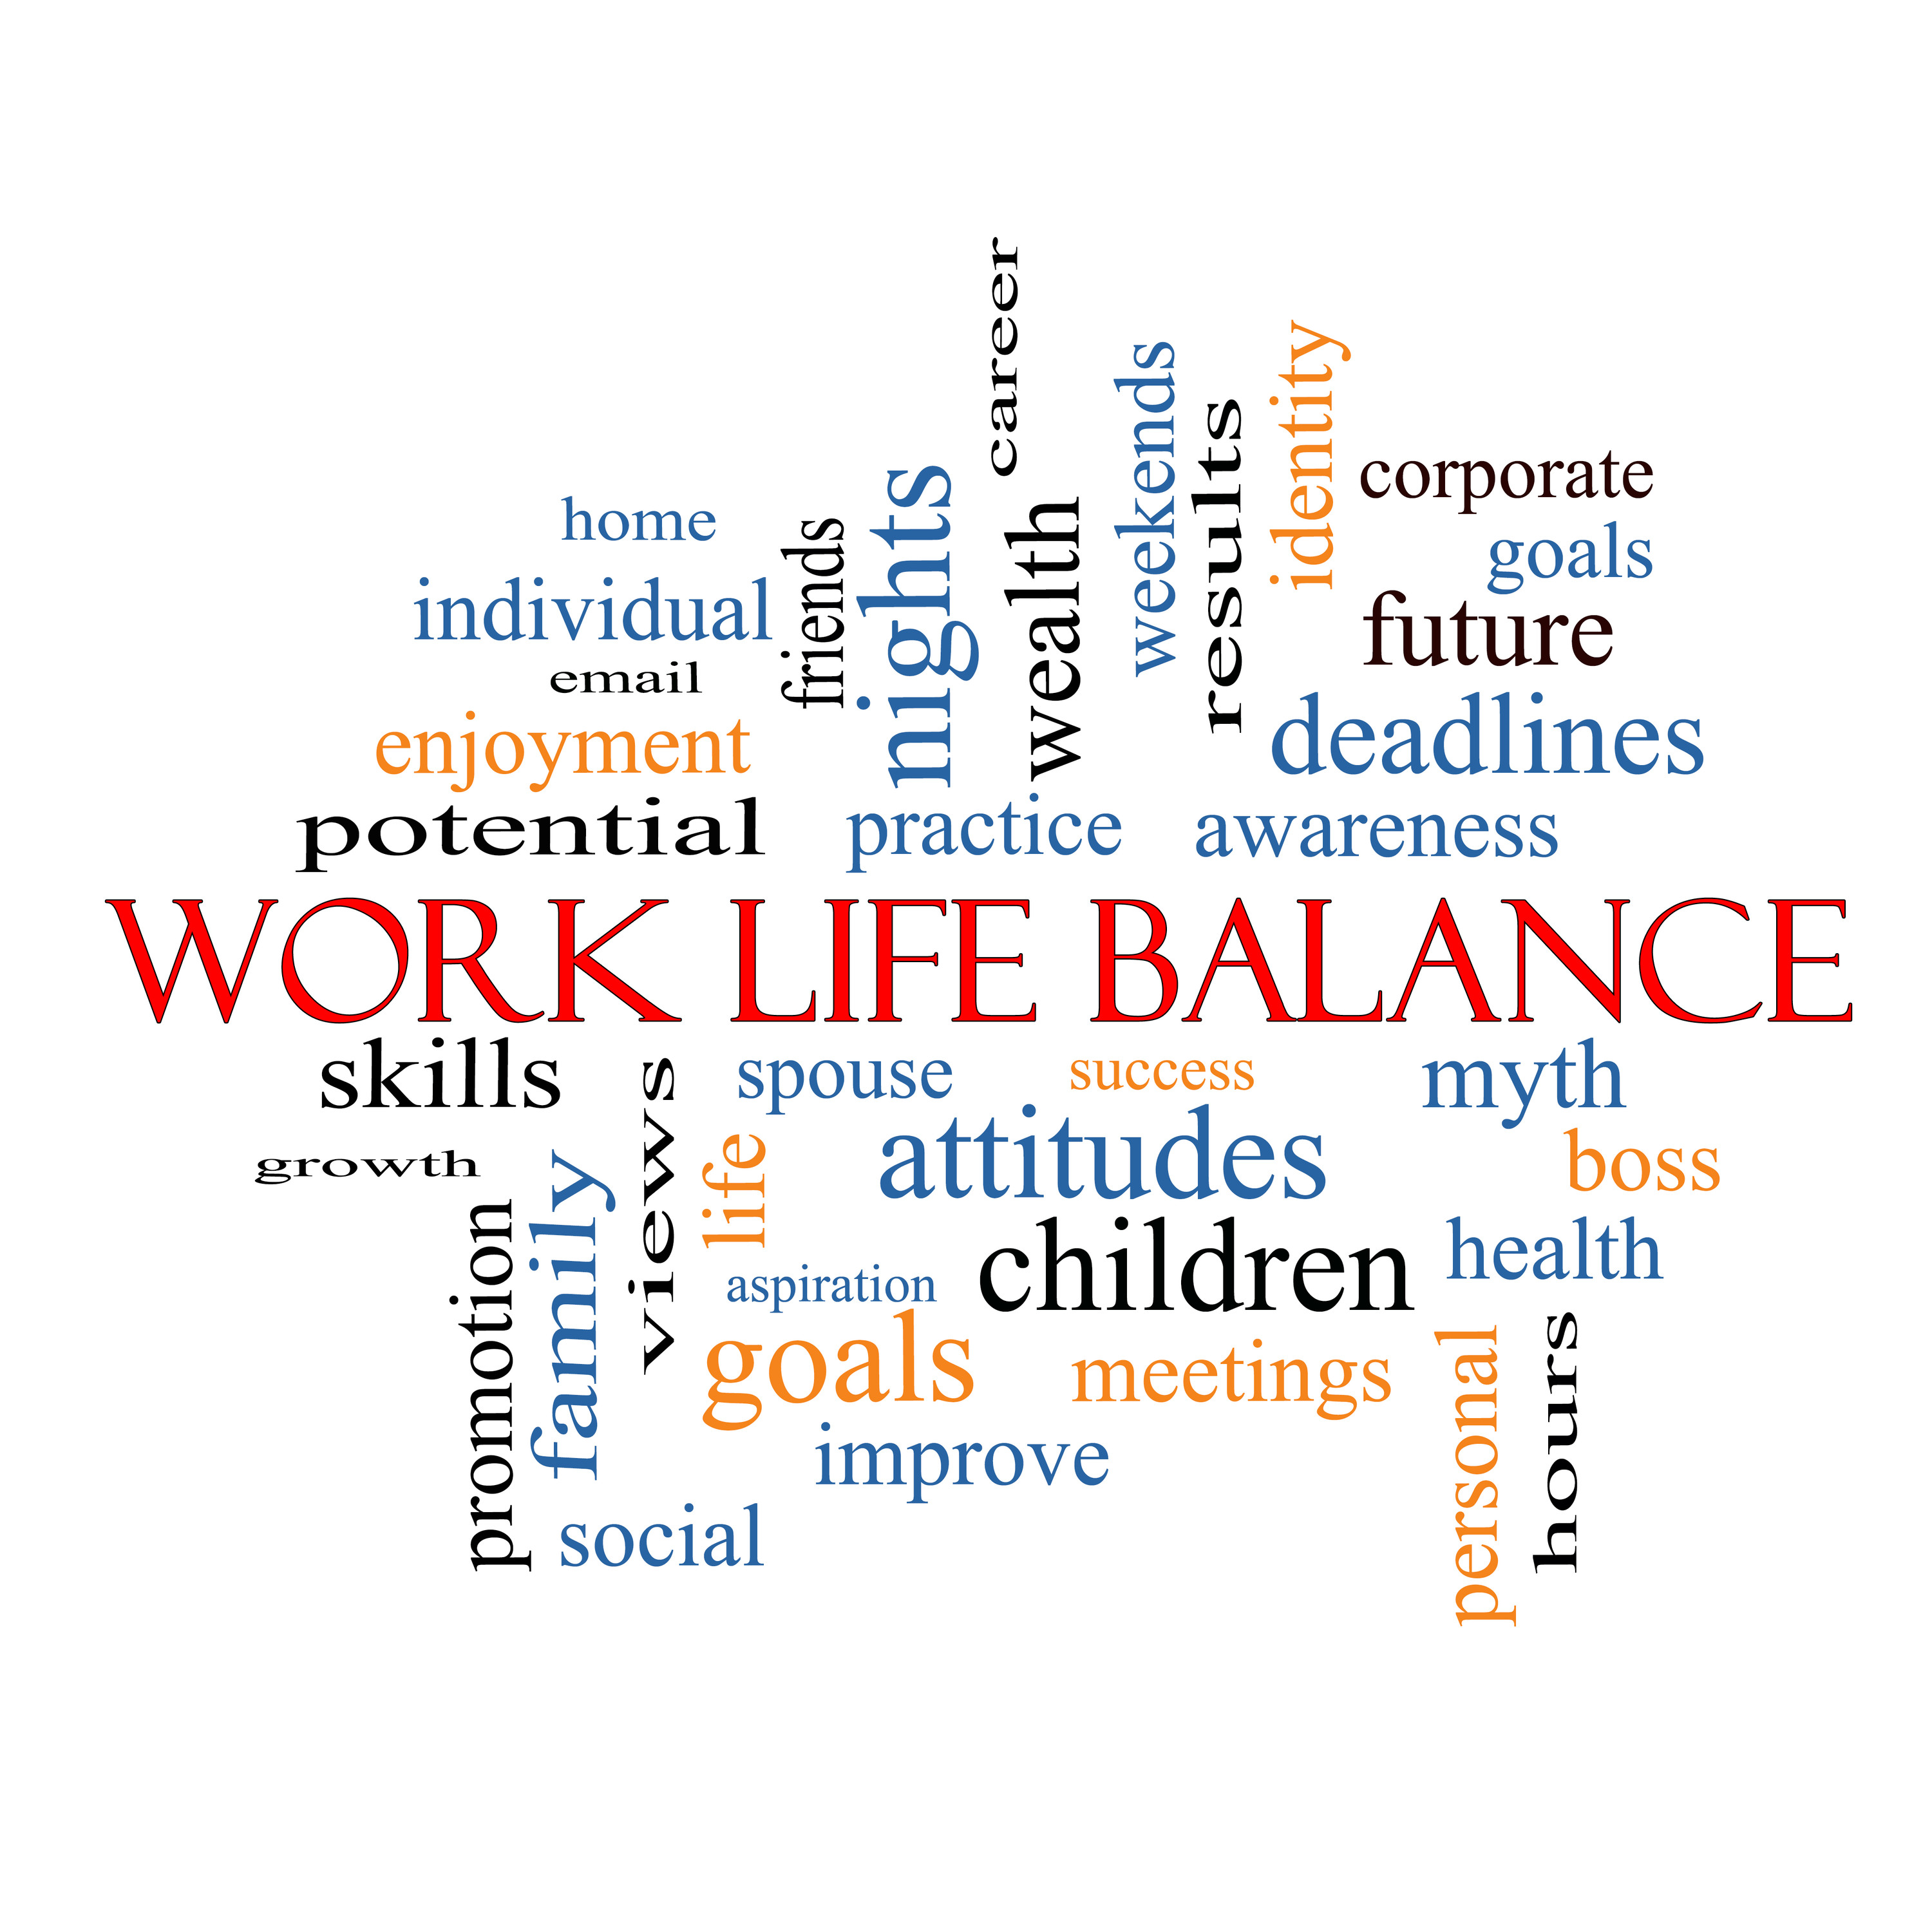 Airline employee work life balance